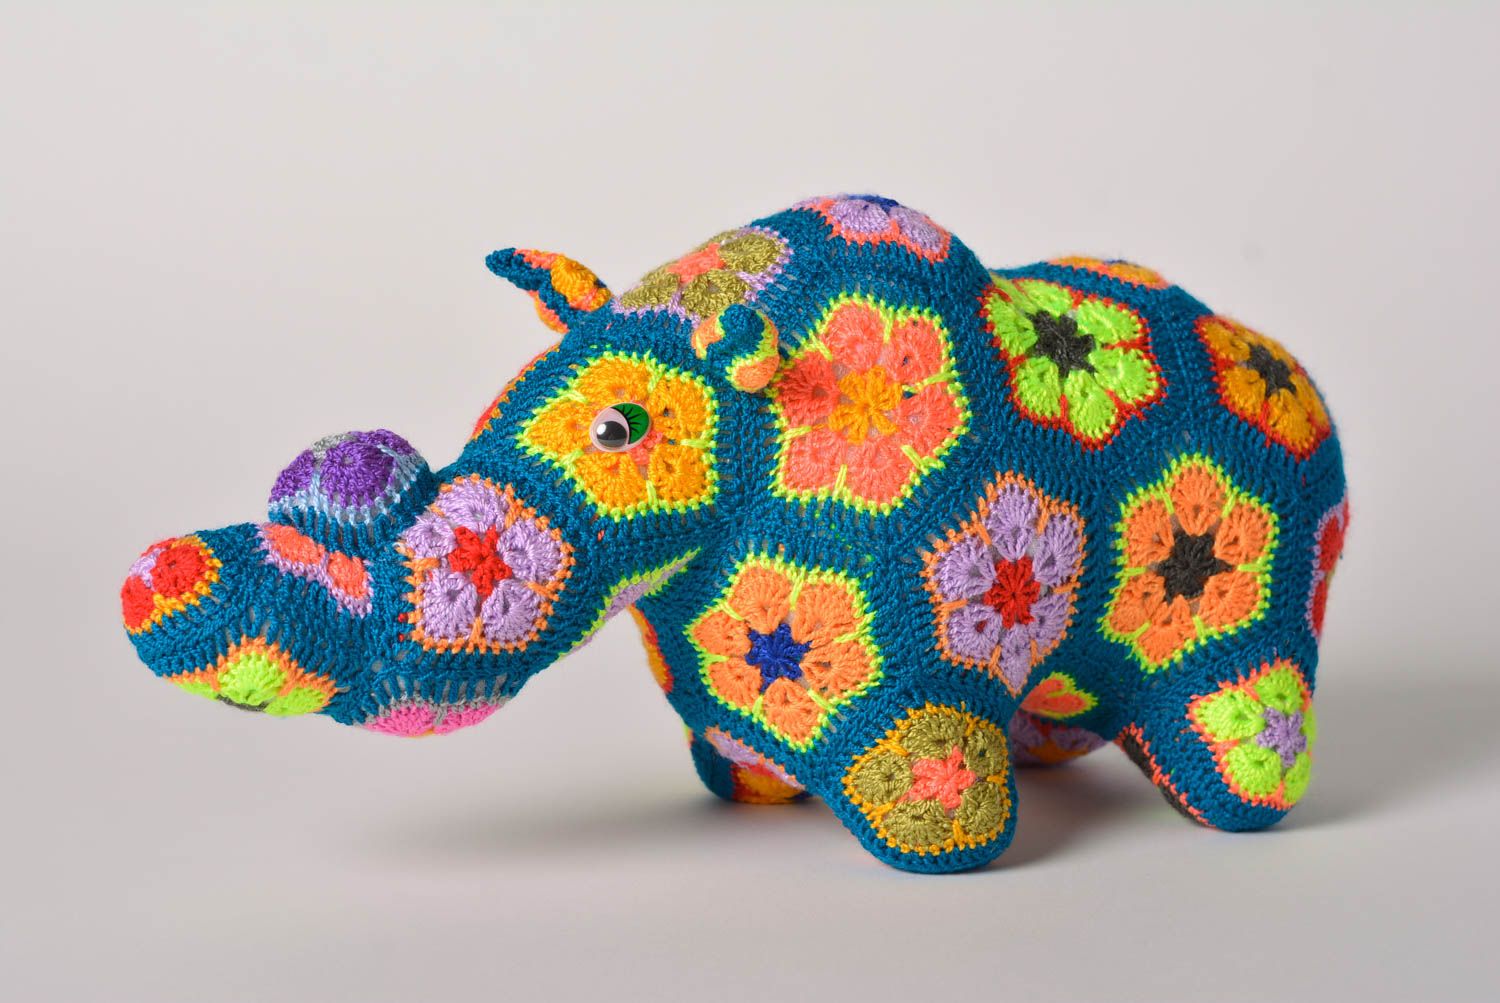 Beautiful handmade crochet toy stuffed toy soft toy for kids nursery design photo 1